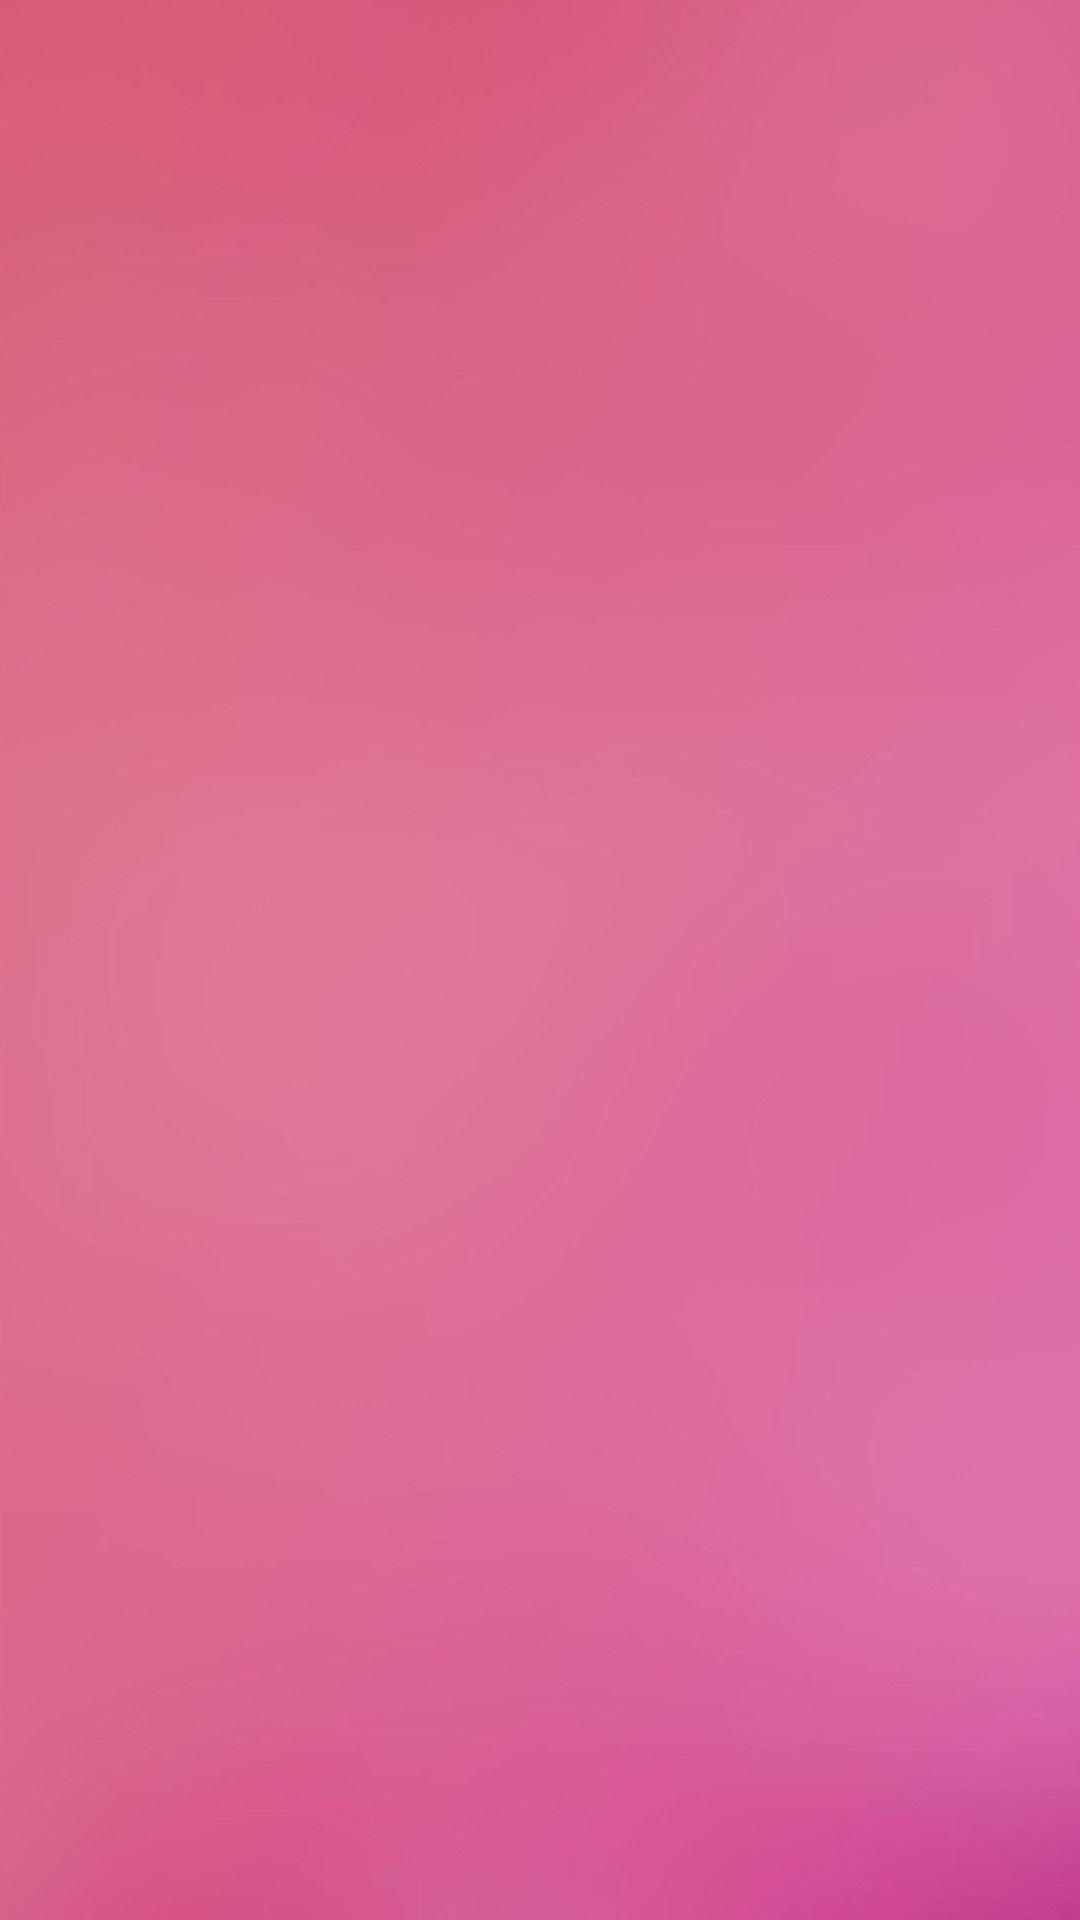 Simple Galaxy S5 wallpaper 37. Pink Wallpaper!. S5